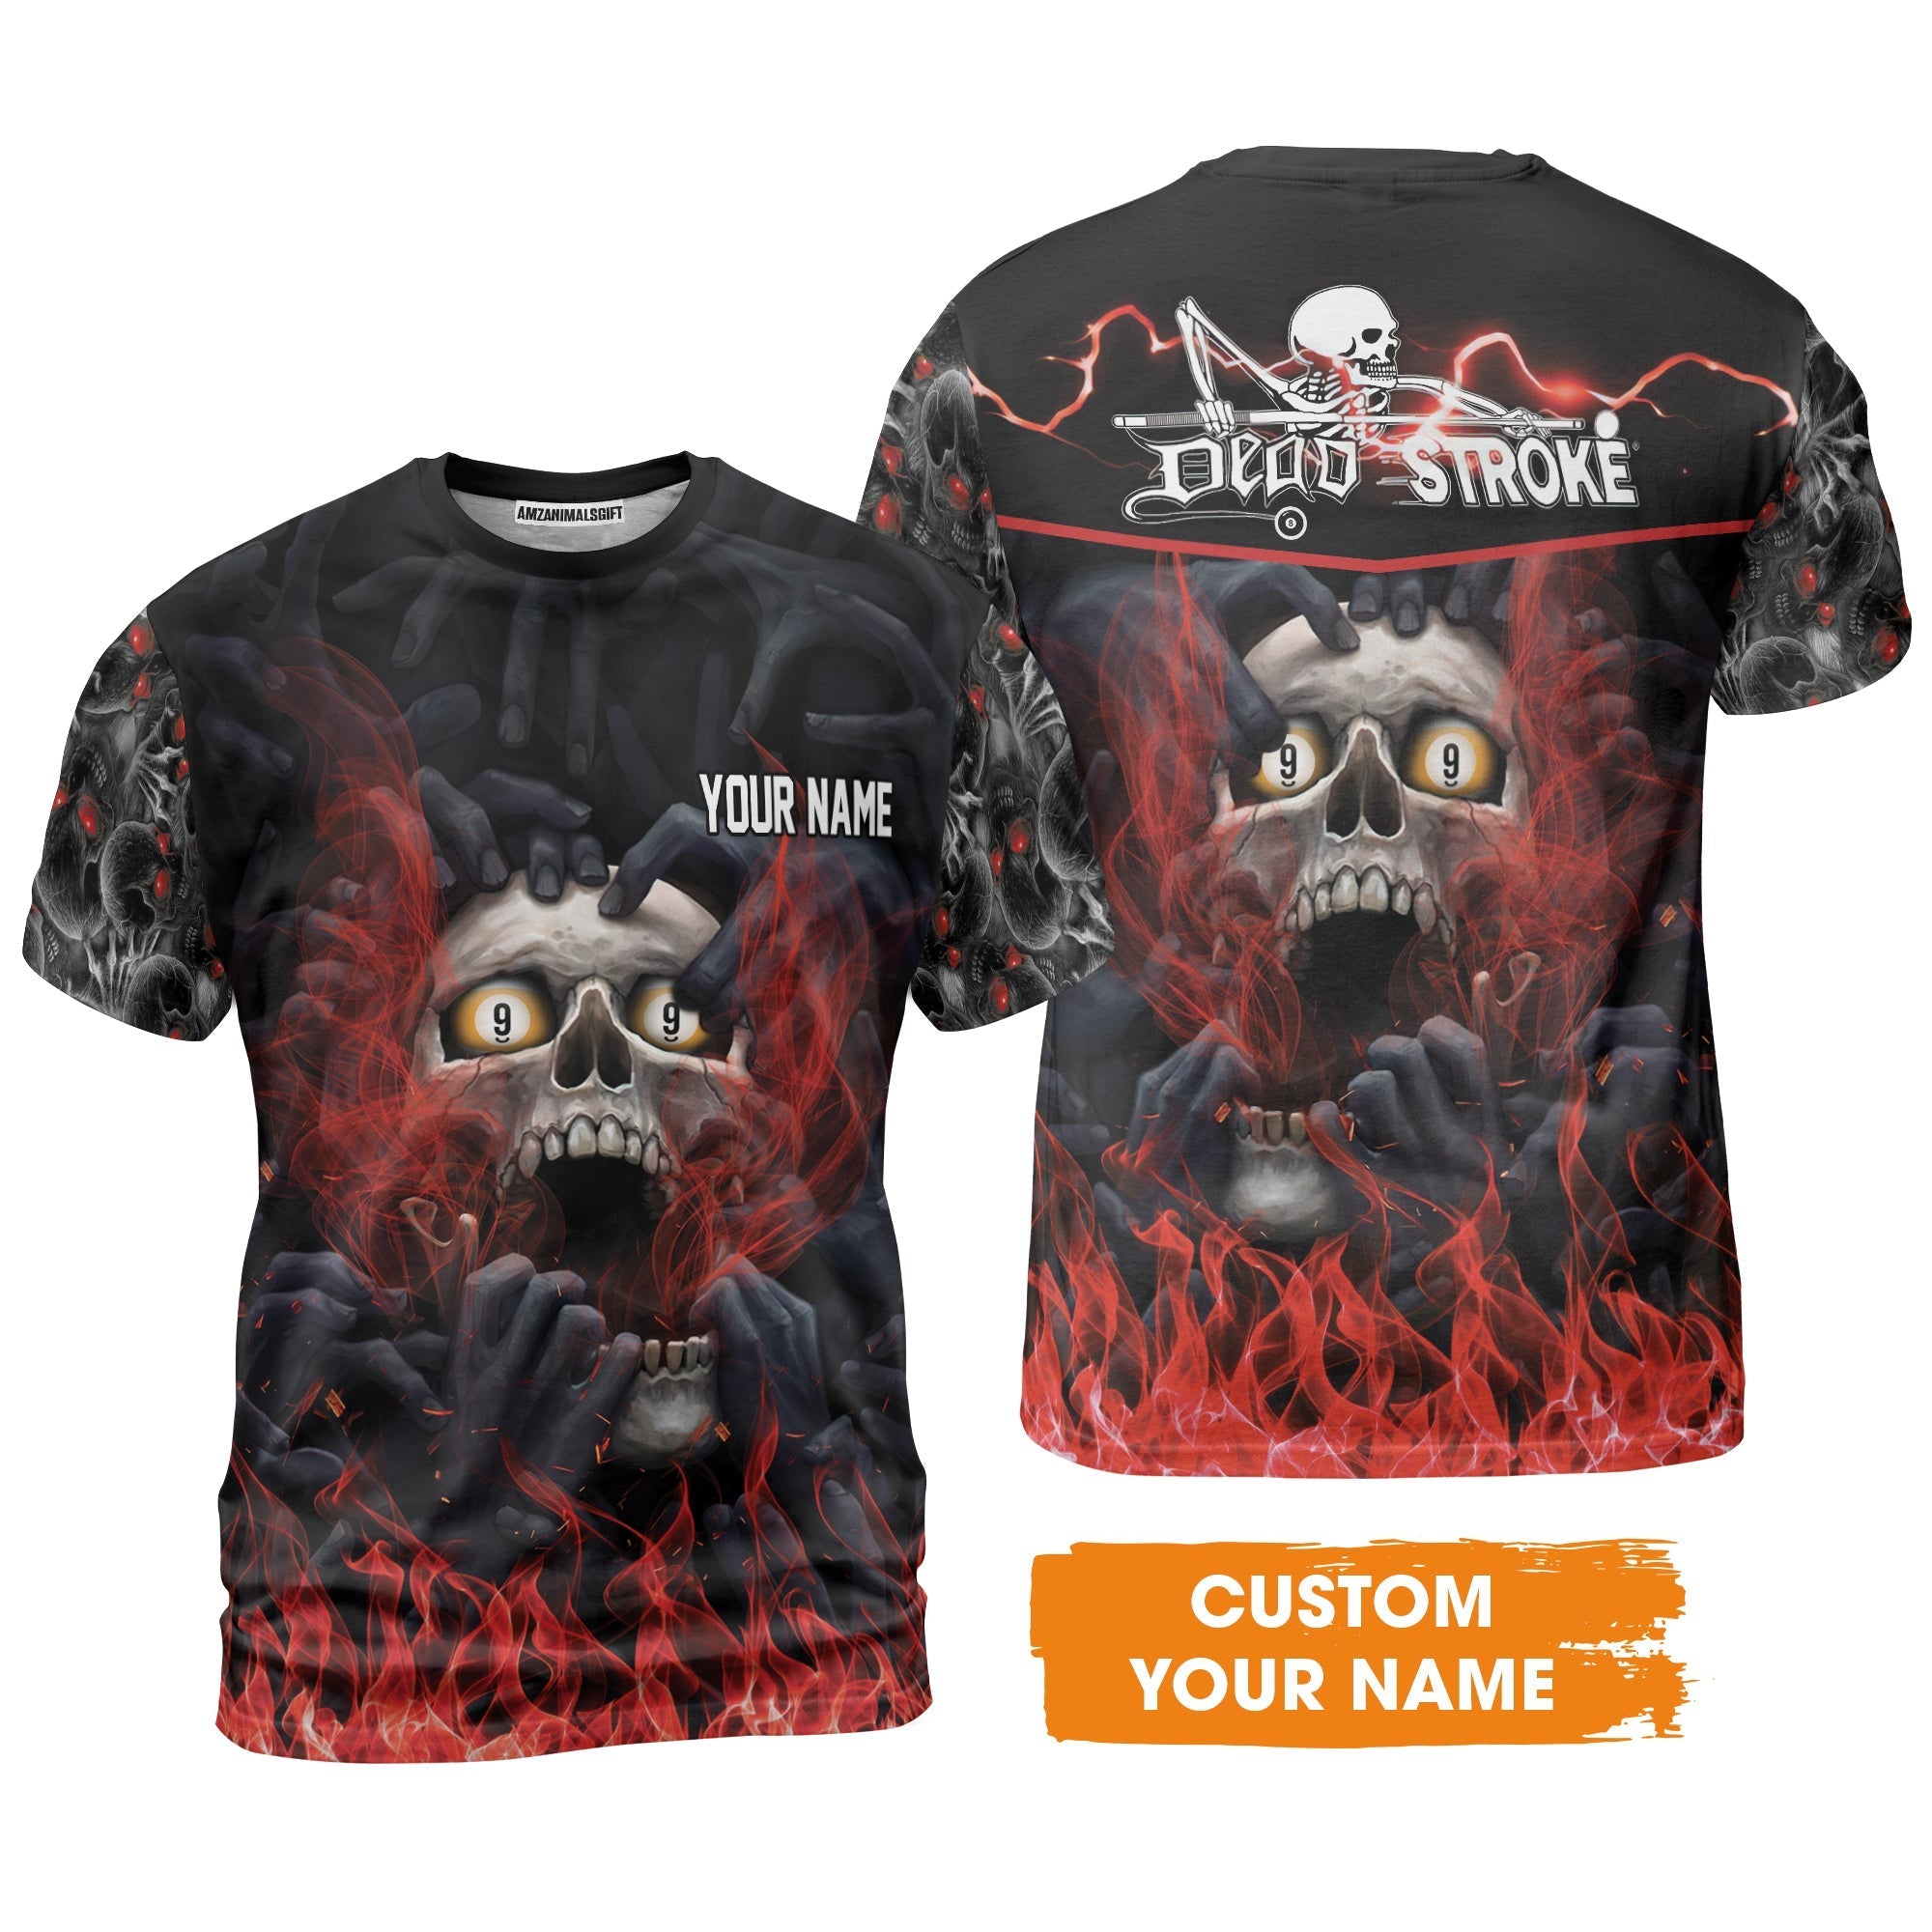 Customized Name Billiard T-Shirt, Dead Stroke Pool 9 Ball Skull On Fire T-Shirt - Gift For Billiard Players